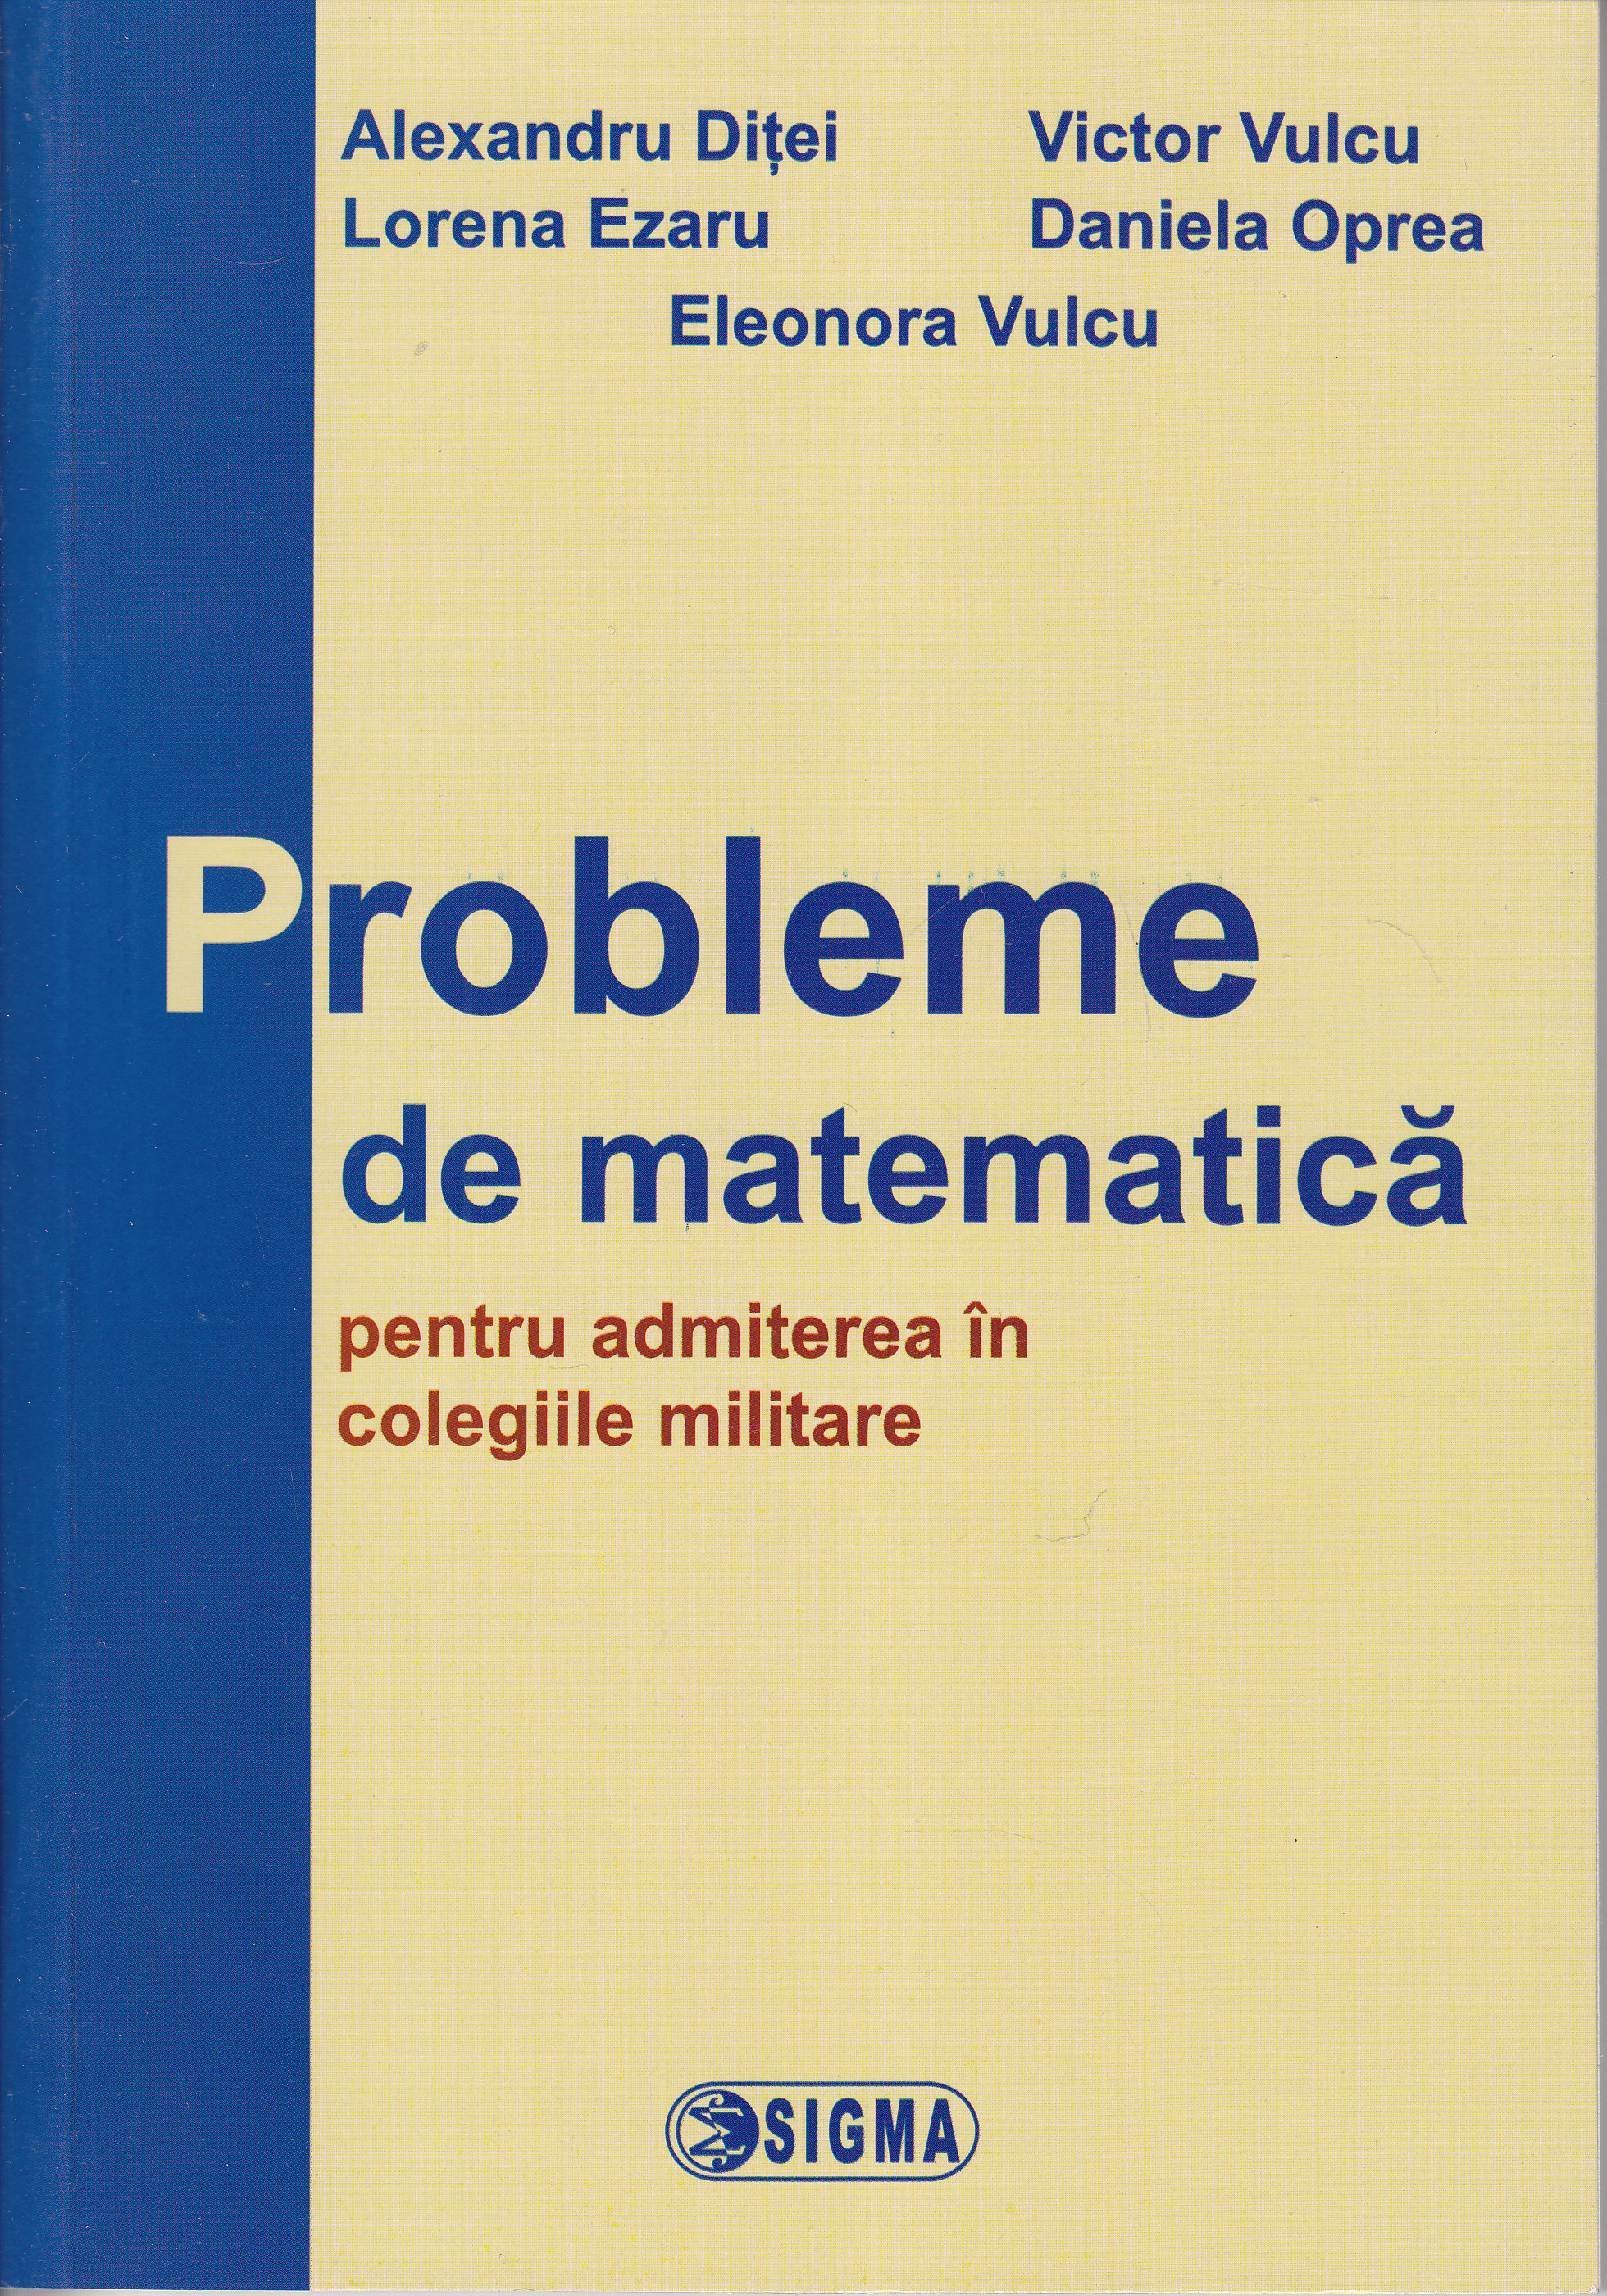 Probleme de matematica pentru admiterea in colegiile militare - Alexandru Ditei, Victor Vulcu